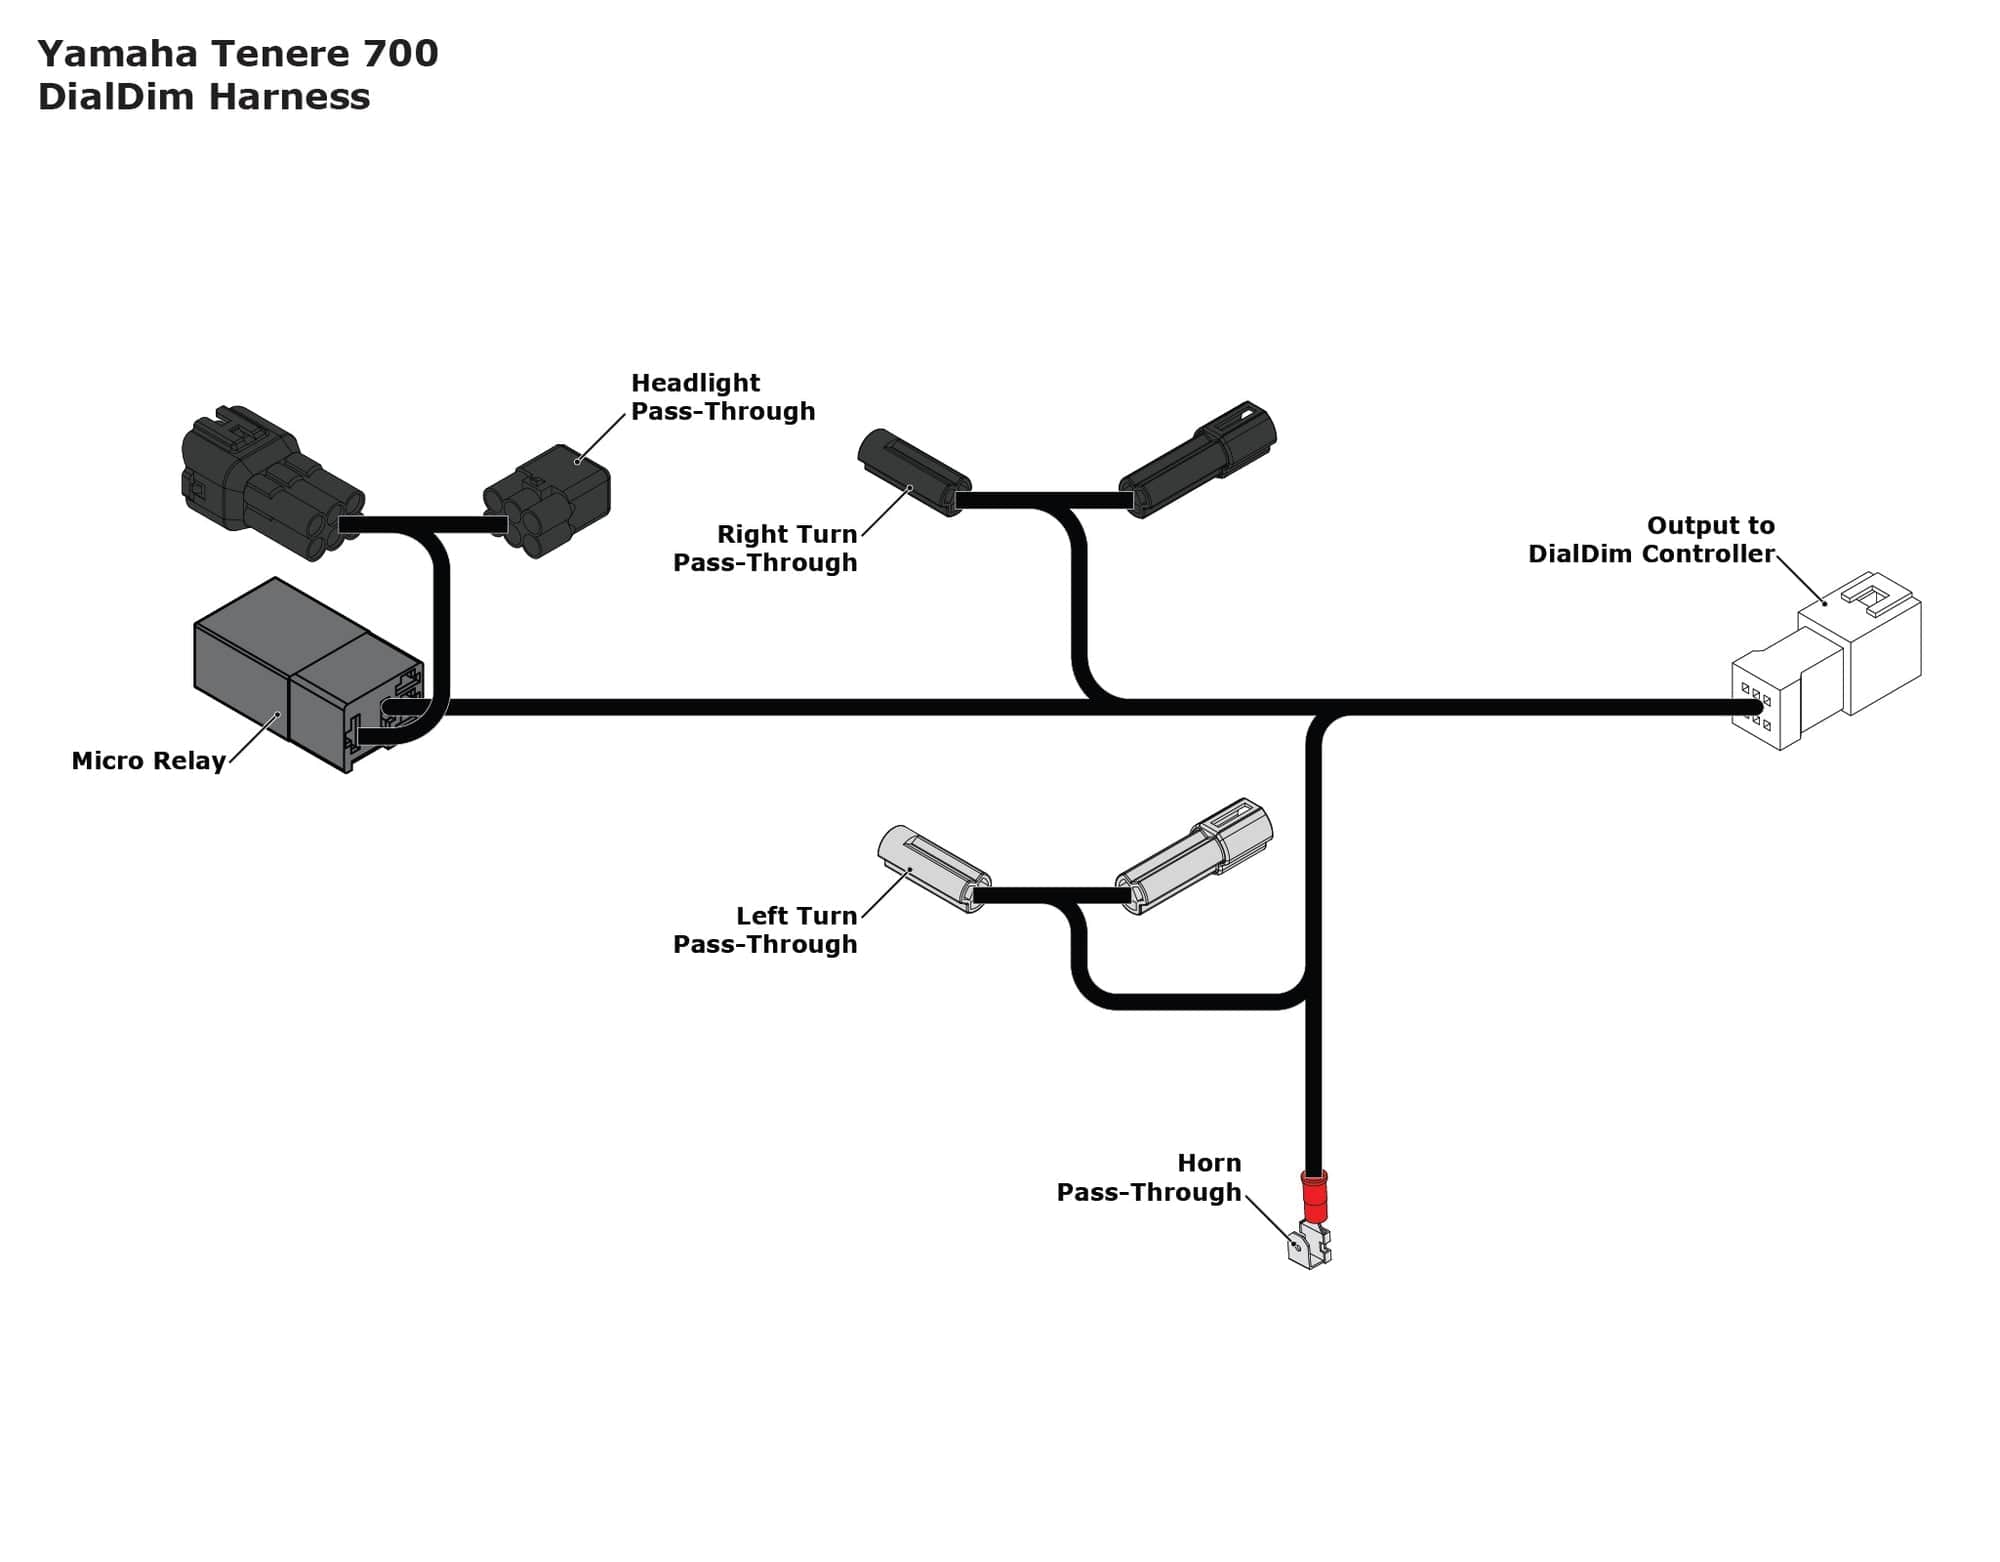 Denali Accessory Management Plug-&-Play DialDim Wiring Adaptor for Yamaha Tenere 700